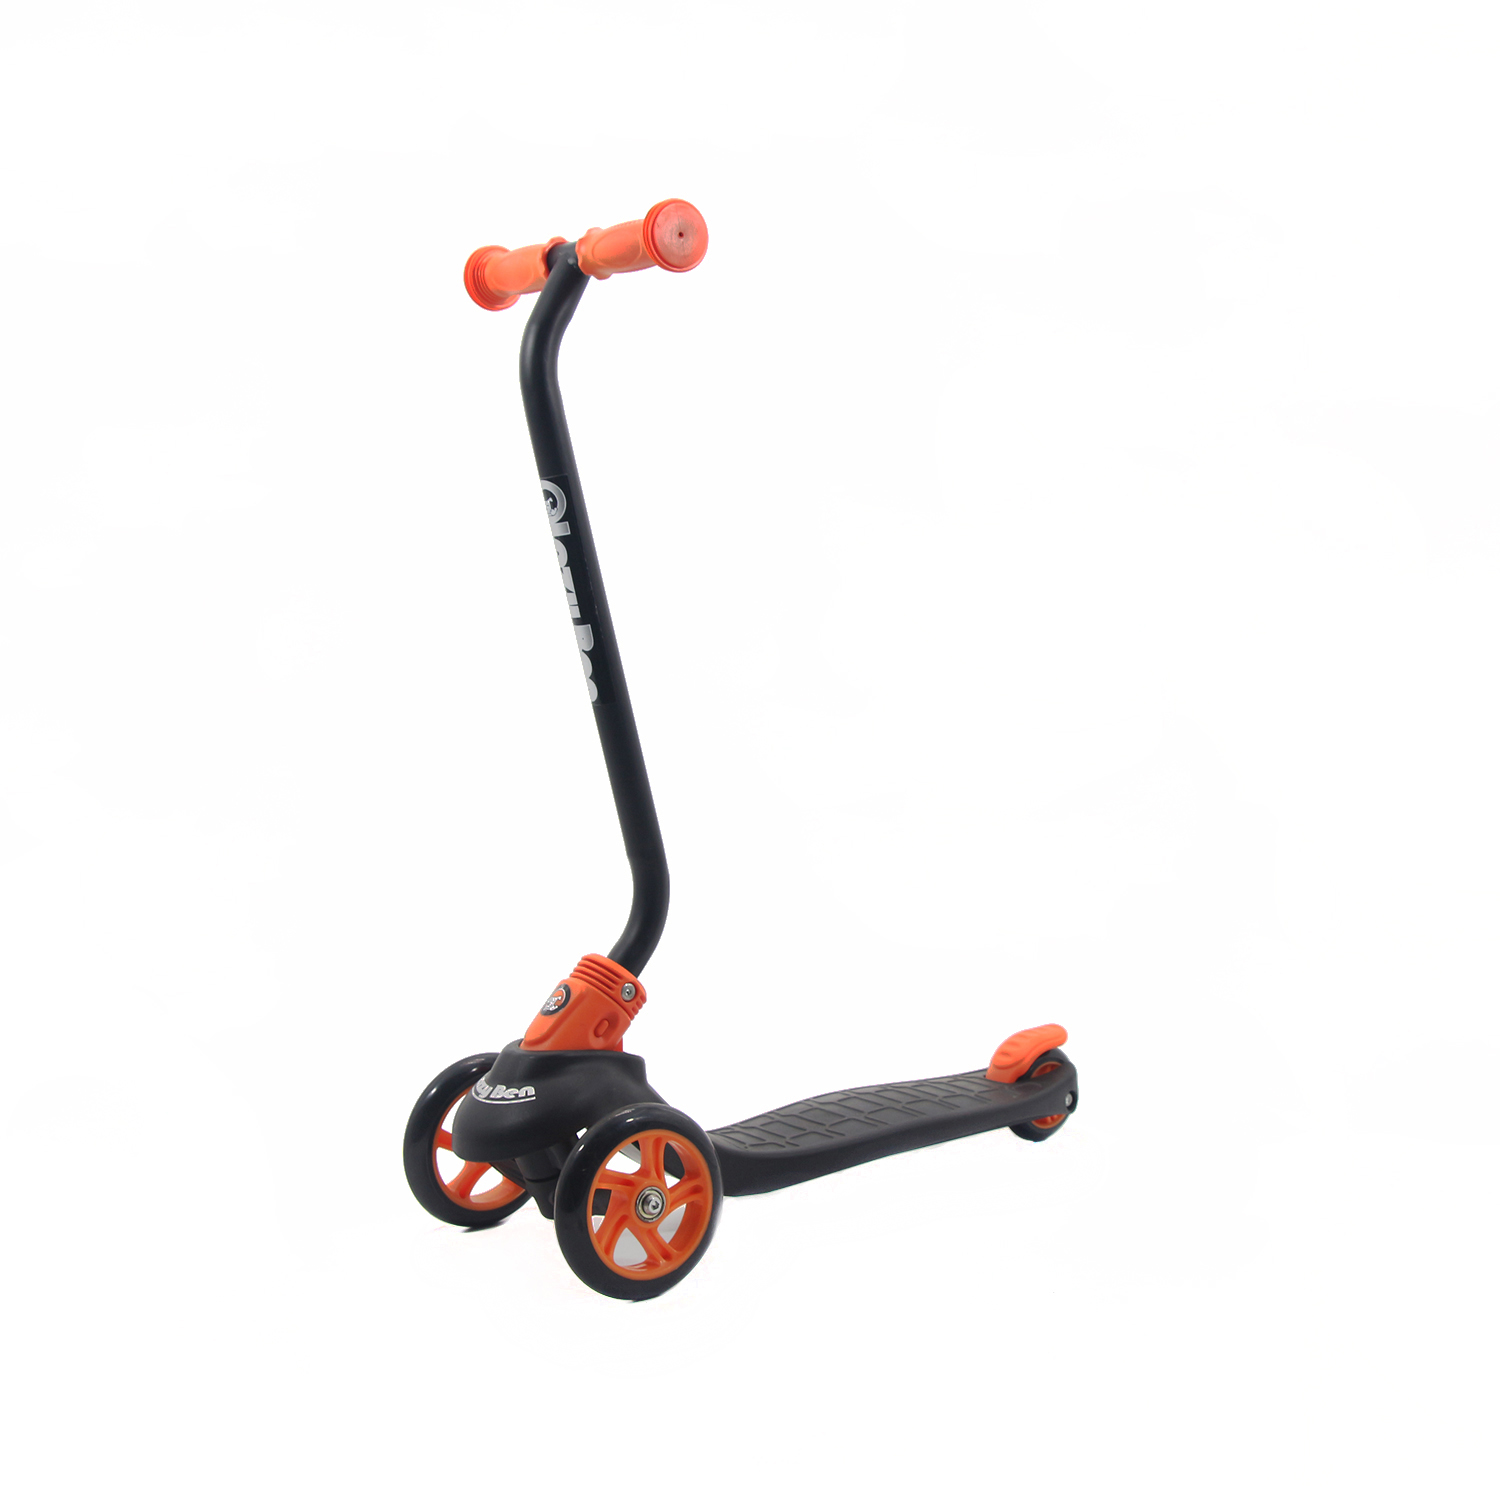 Mini scooter plegable para niños con altura ajustable